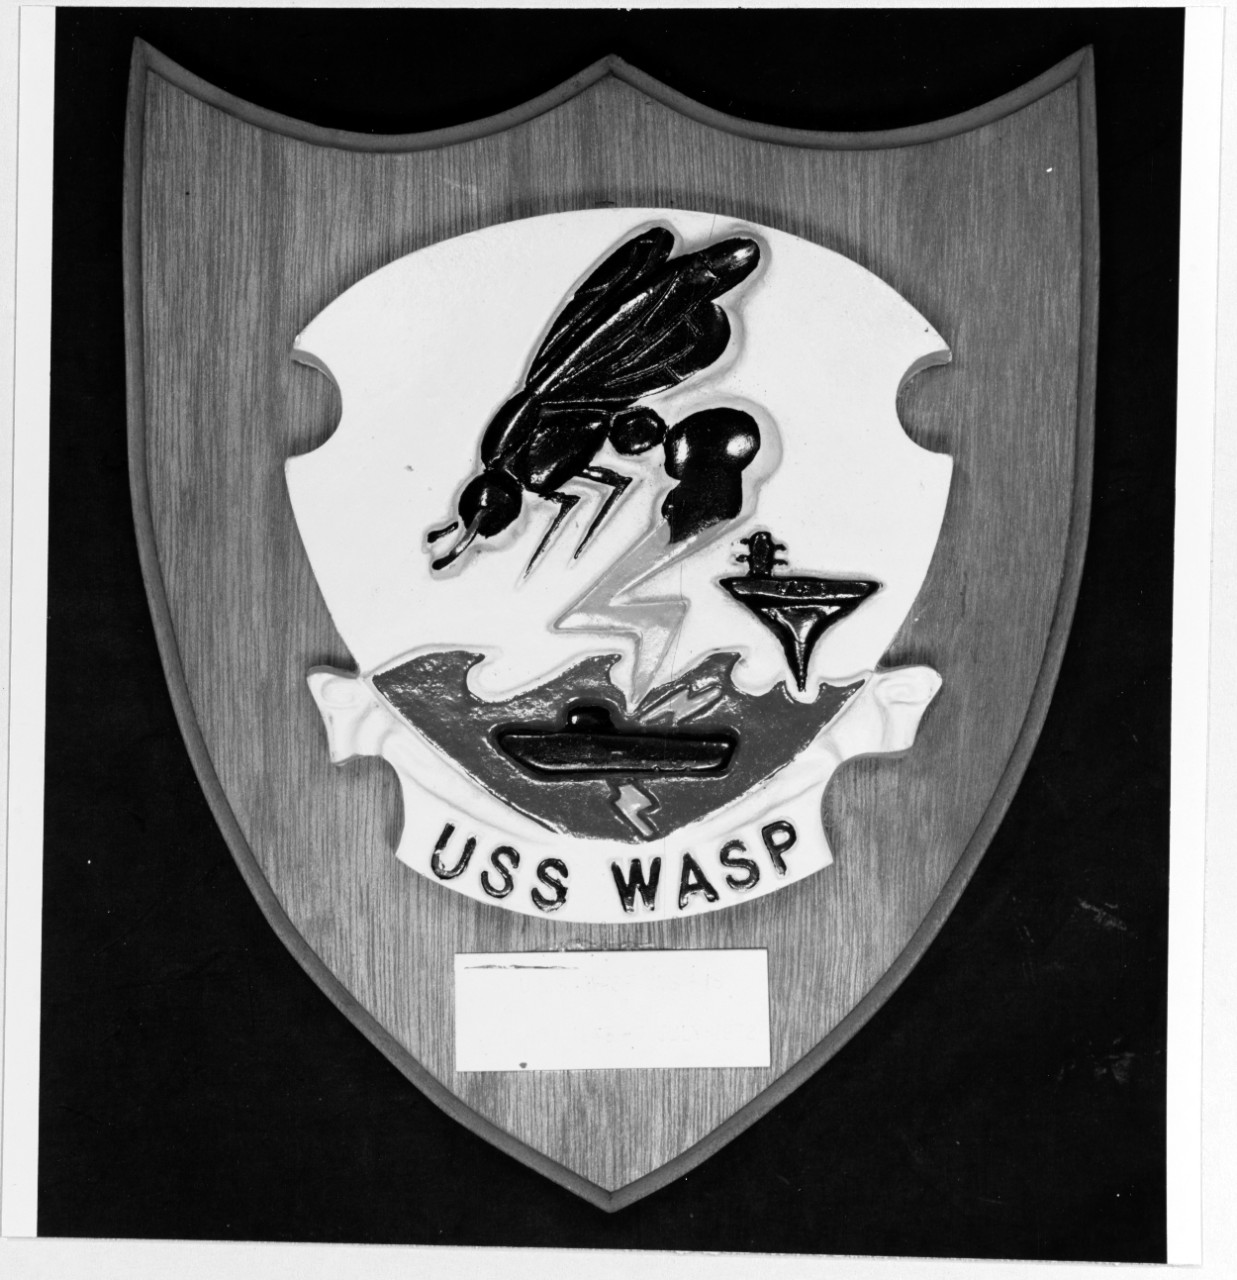 USS WASP (CVS-18)